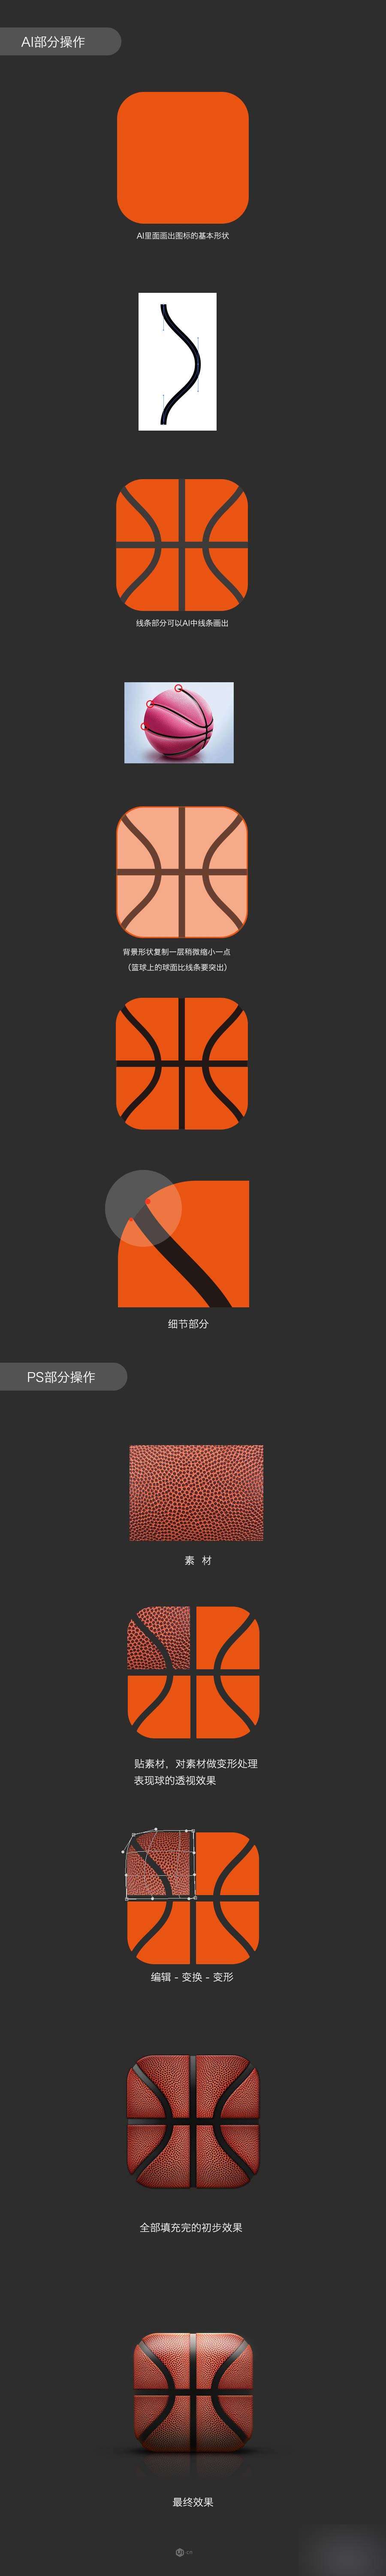 PS结合AI鼠绘质感的正方形篮球app图标